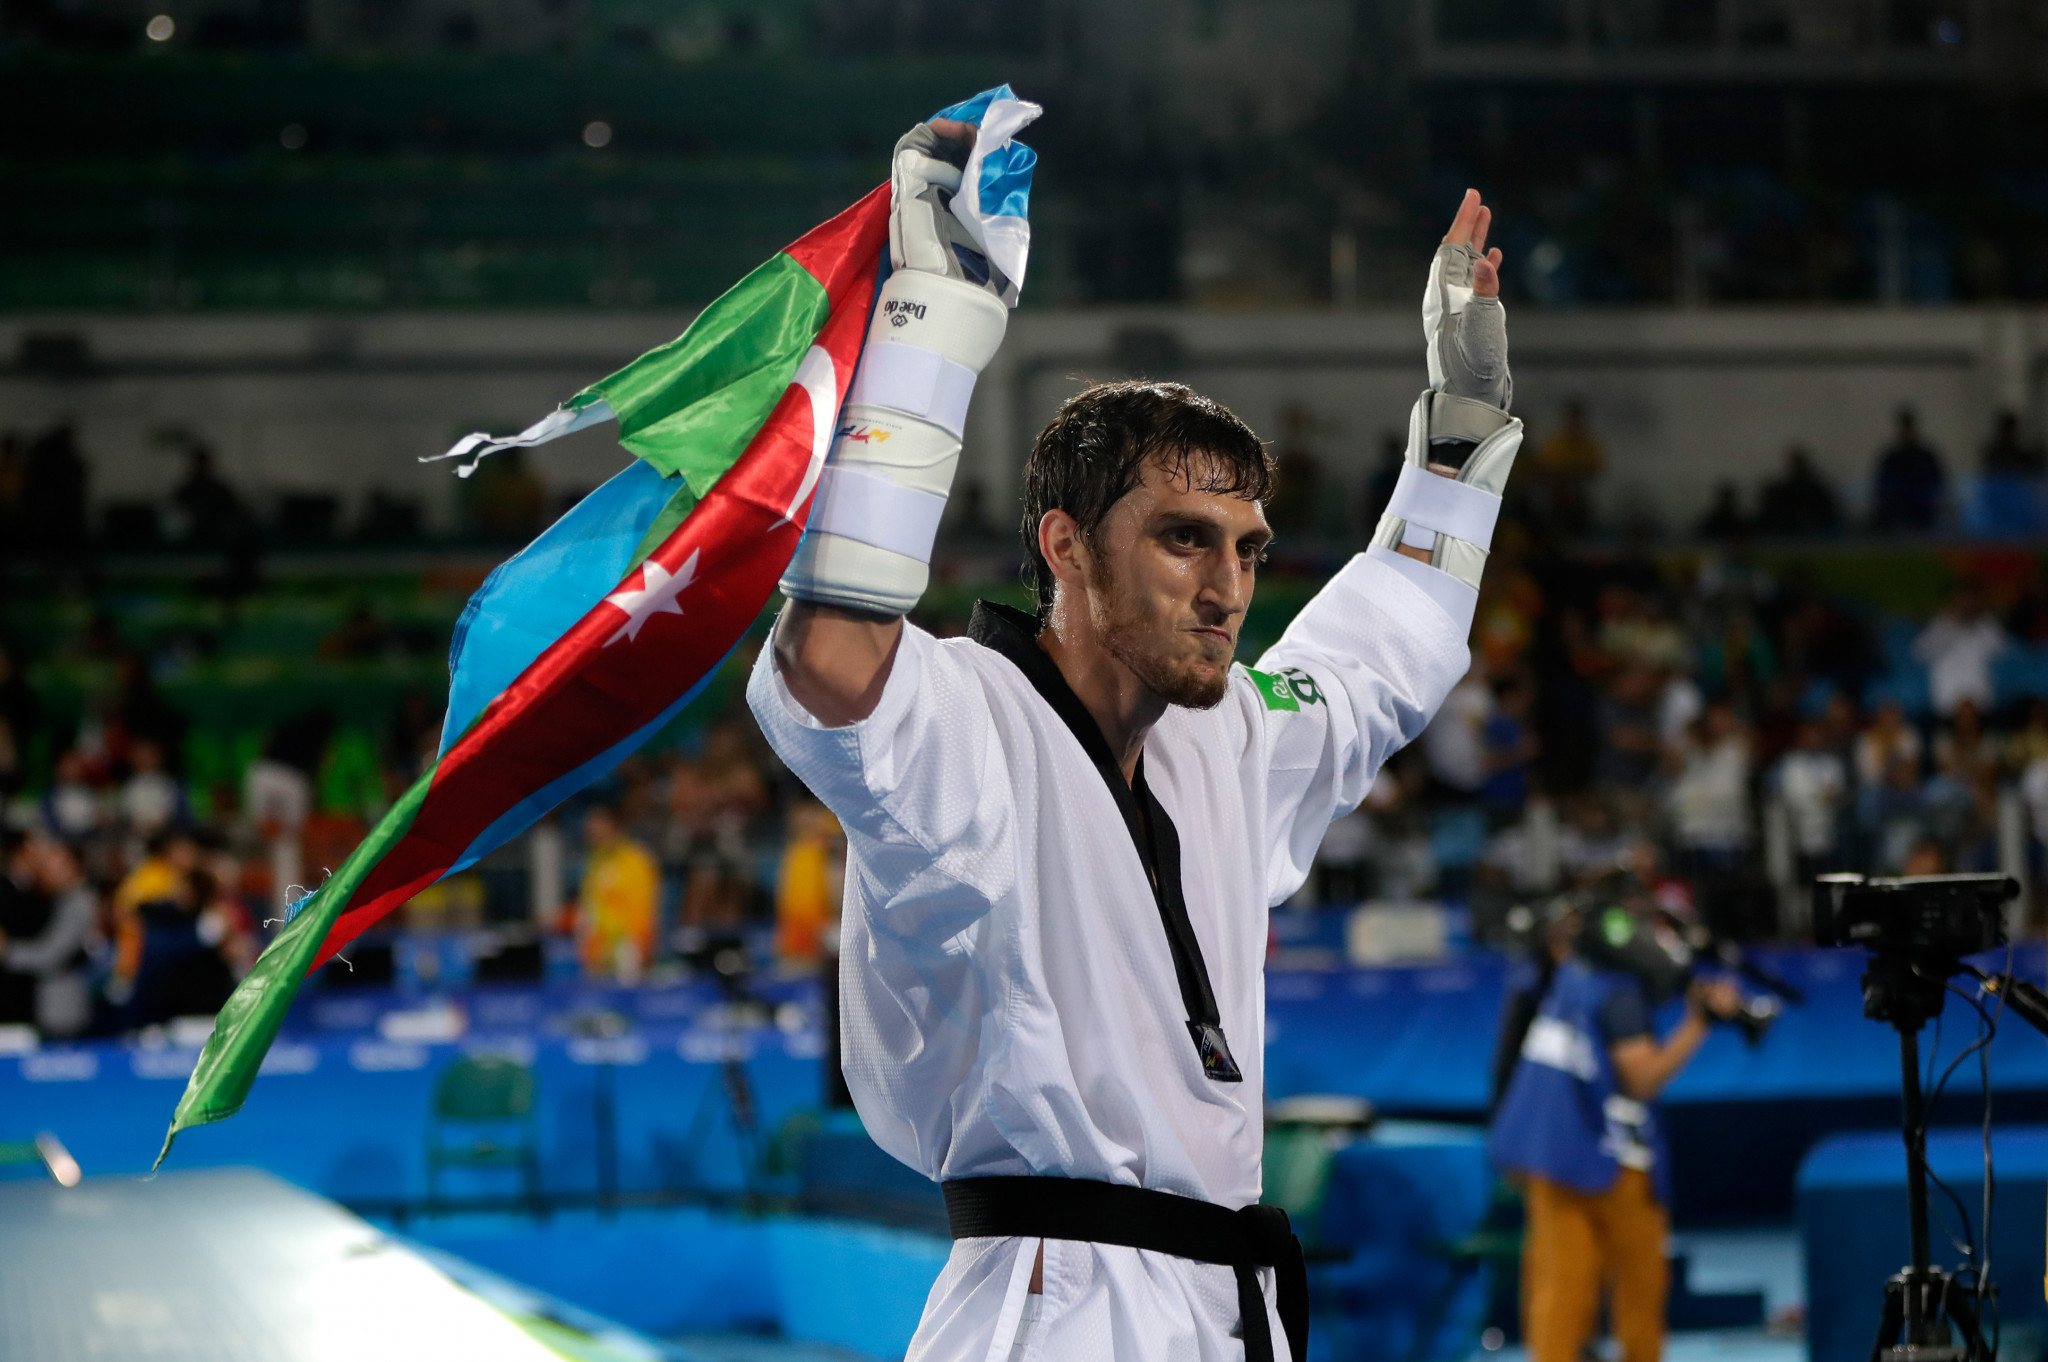 Radik Isayev won Olympic gold at Rio 2016 ©Getty Images